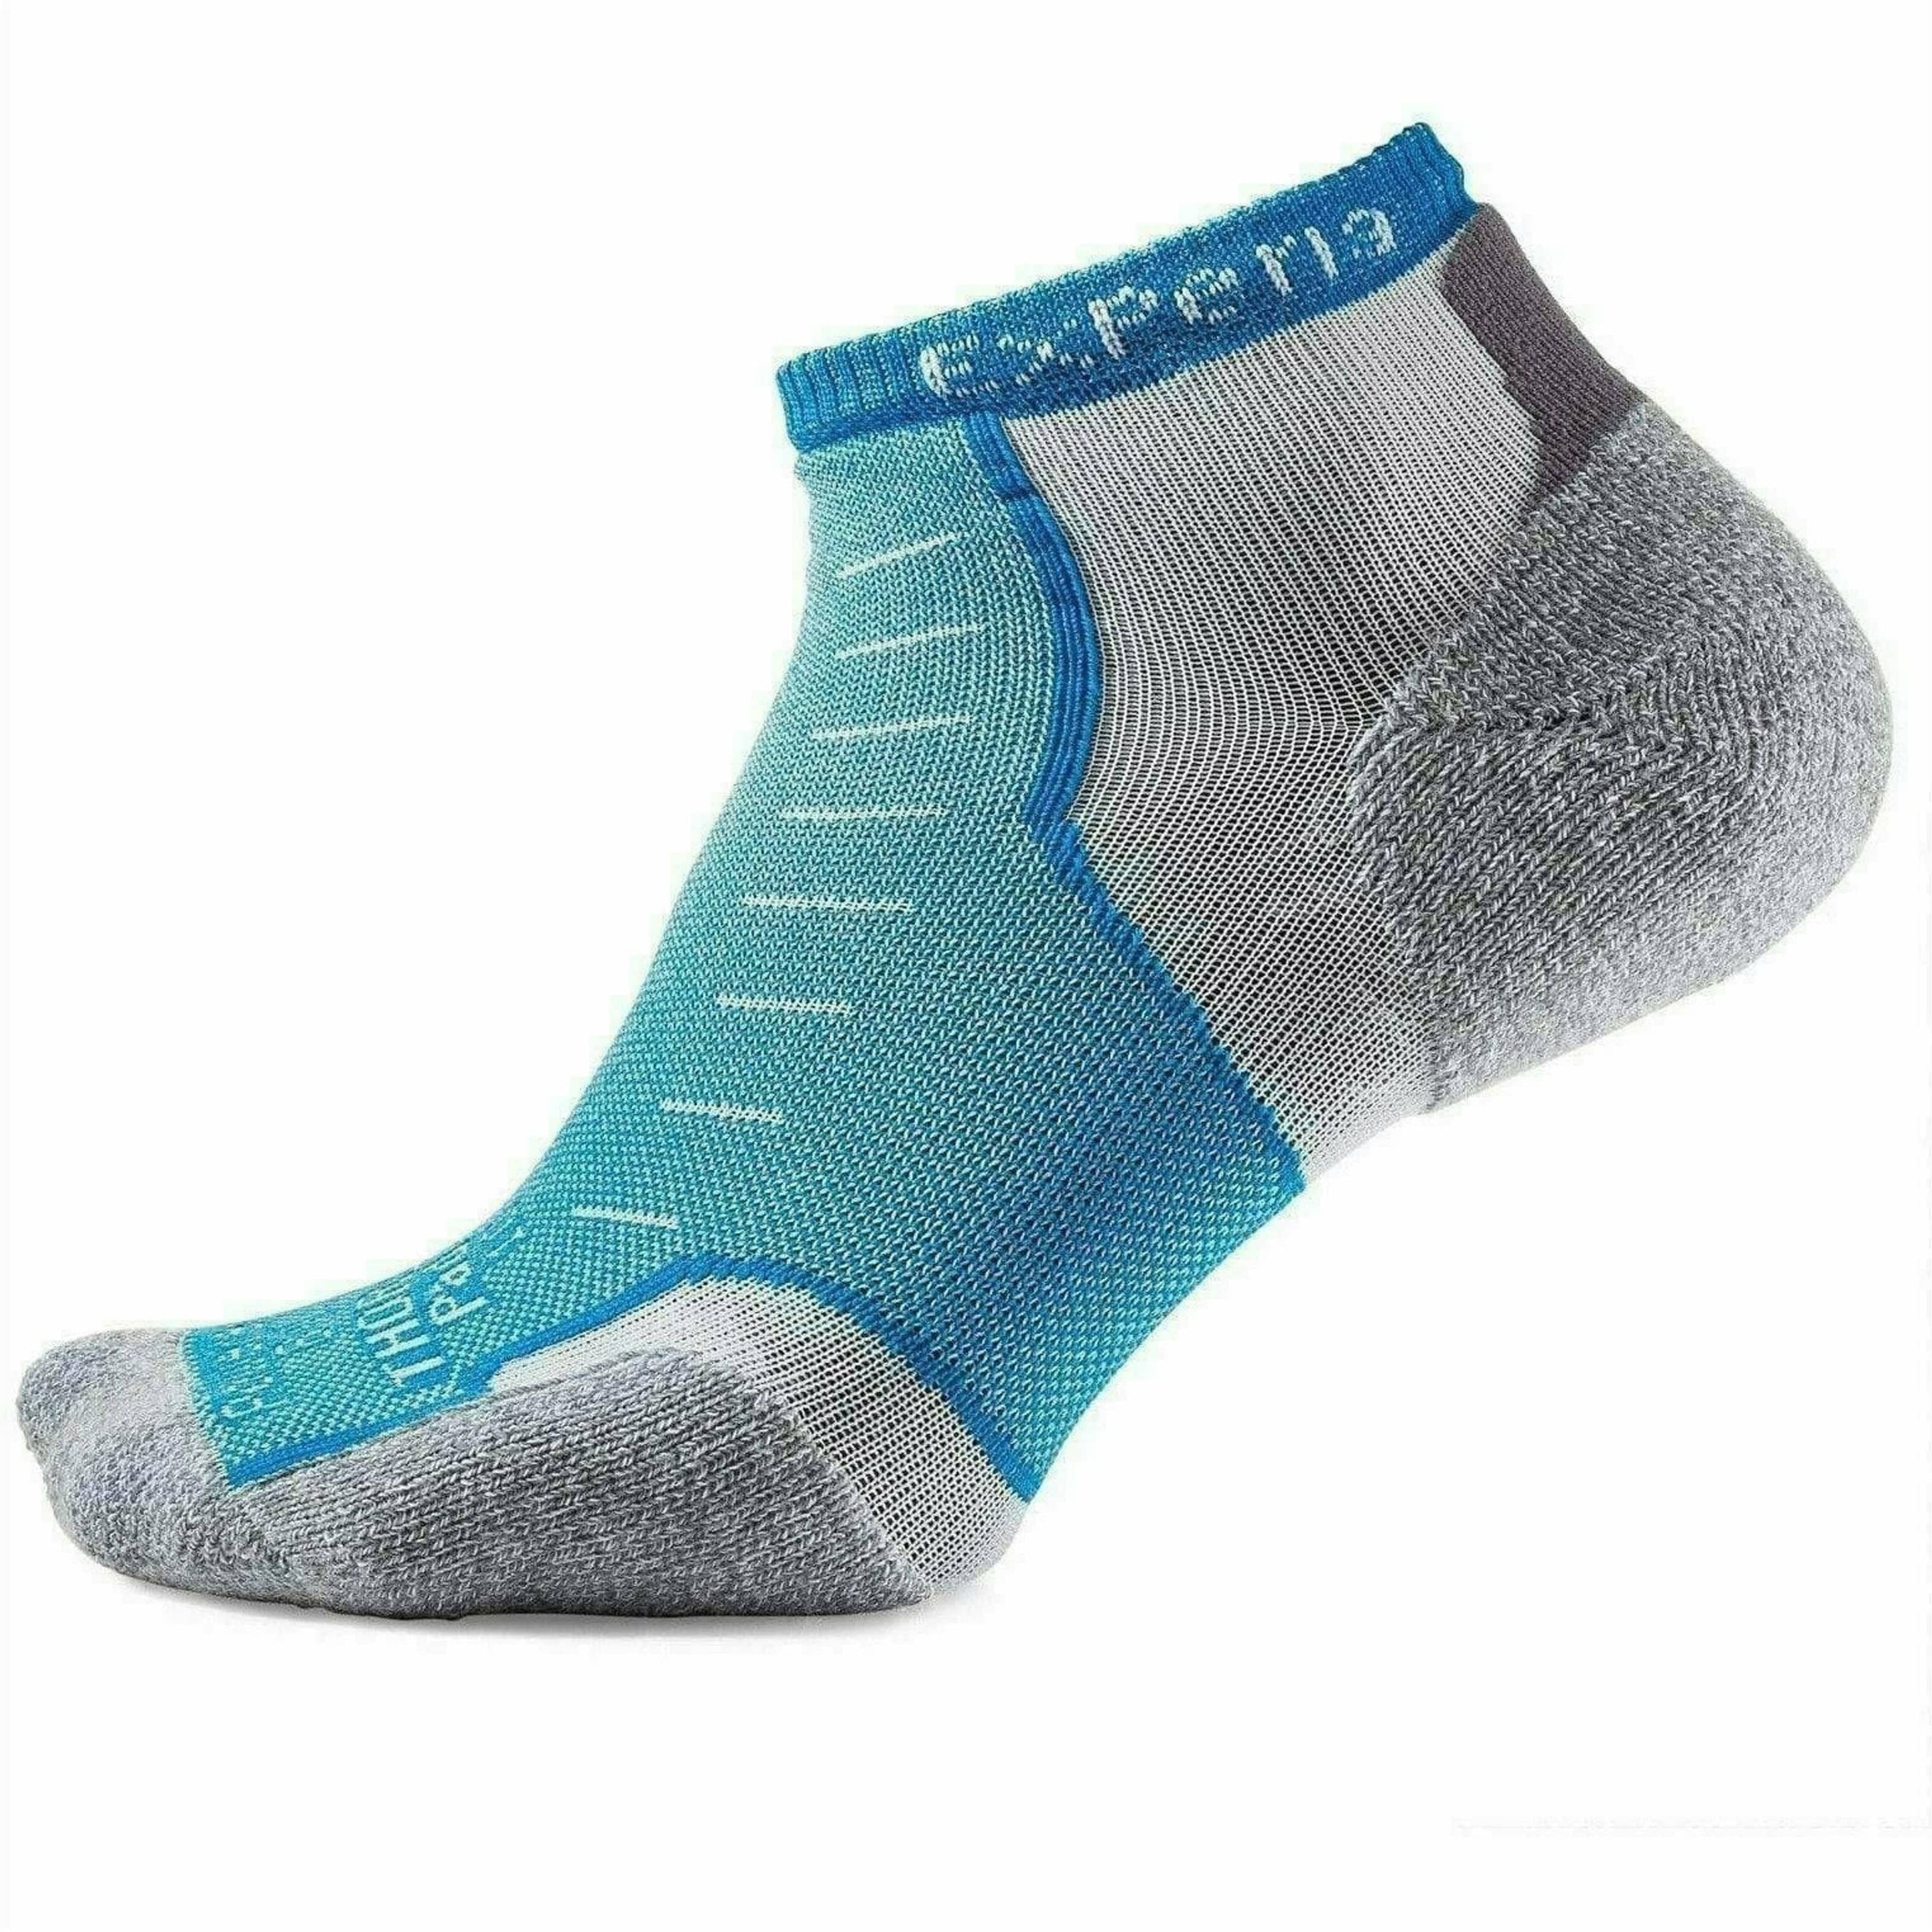 Thorlo Experia Multisport Low-Cut Socks | GoBros.com | Reviews on Judge.me